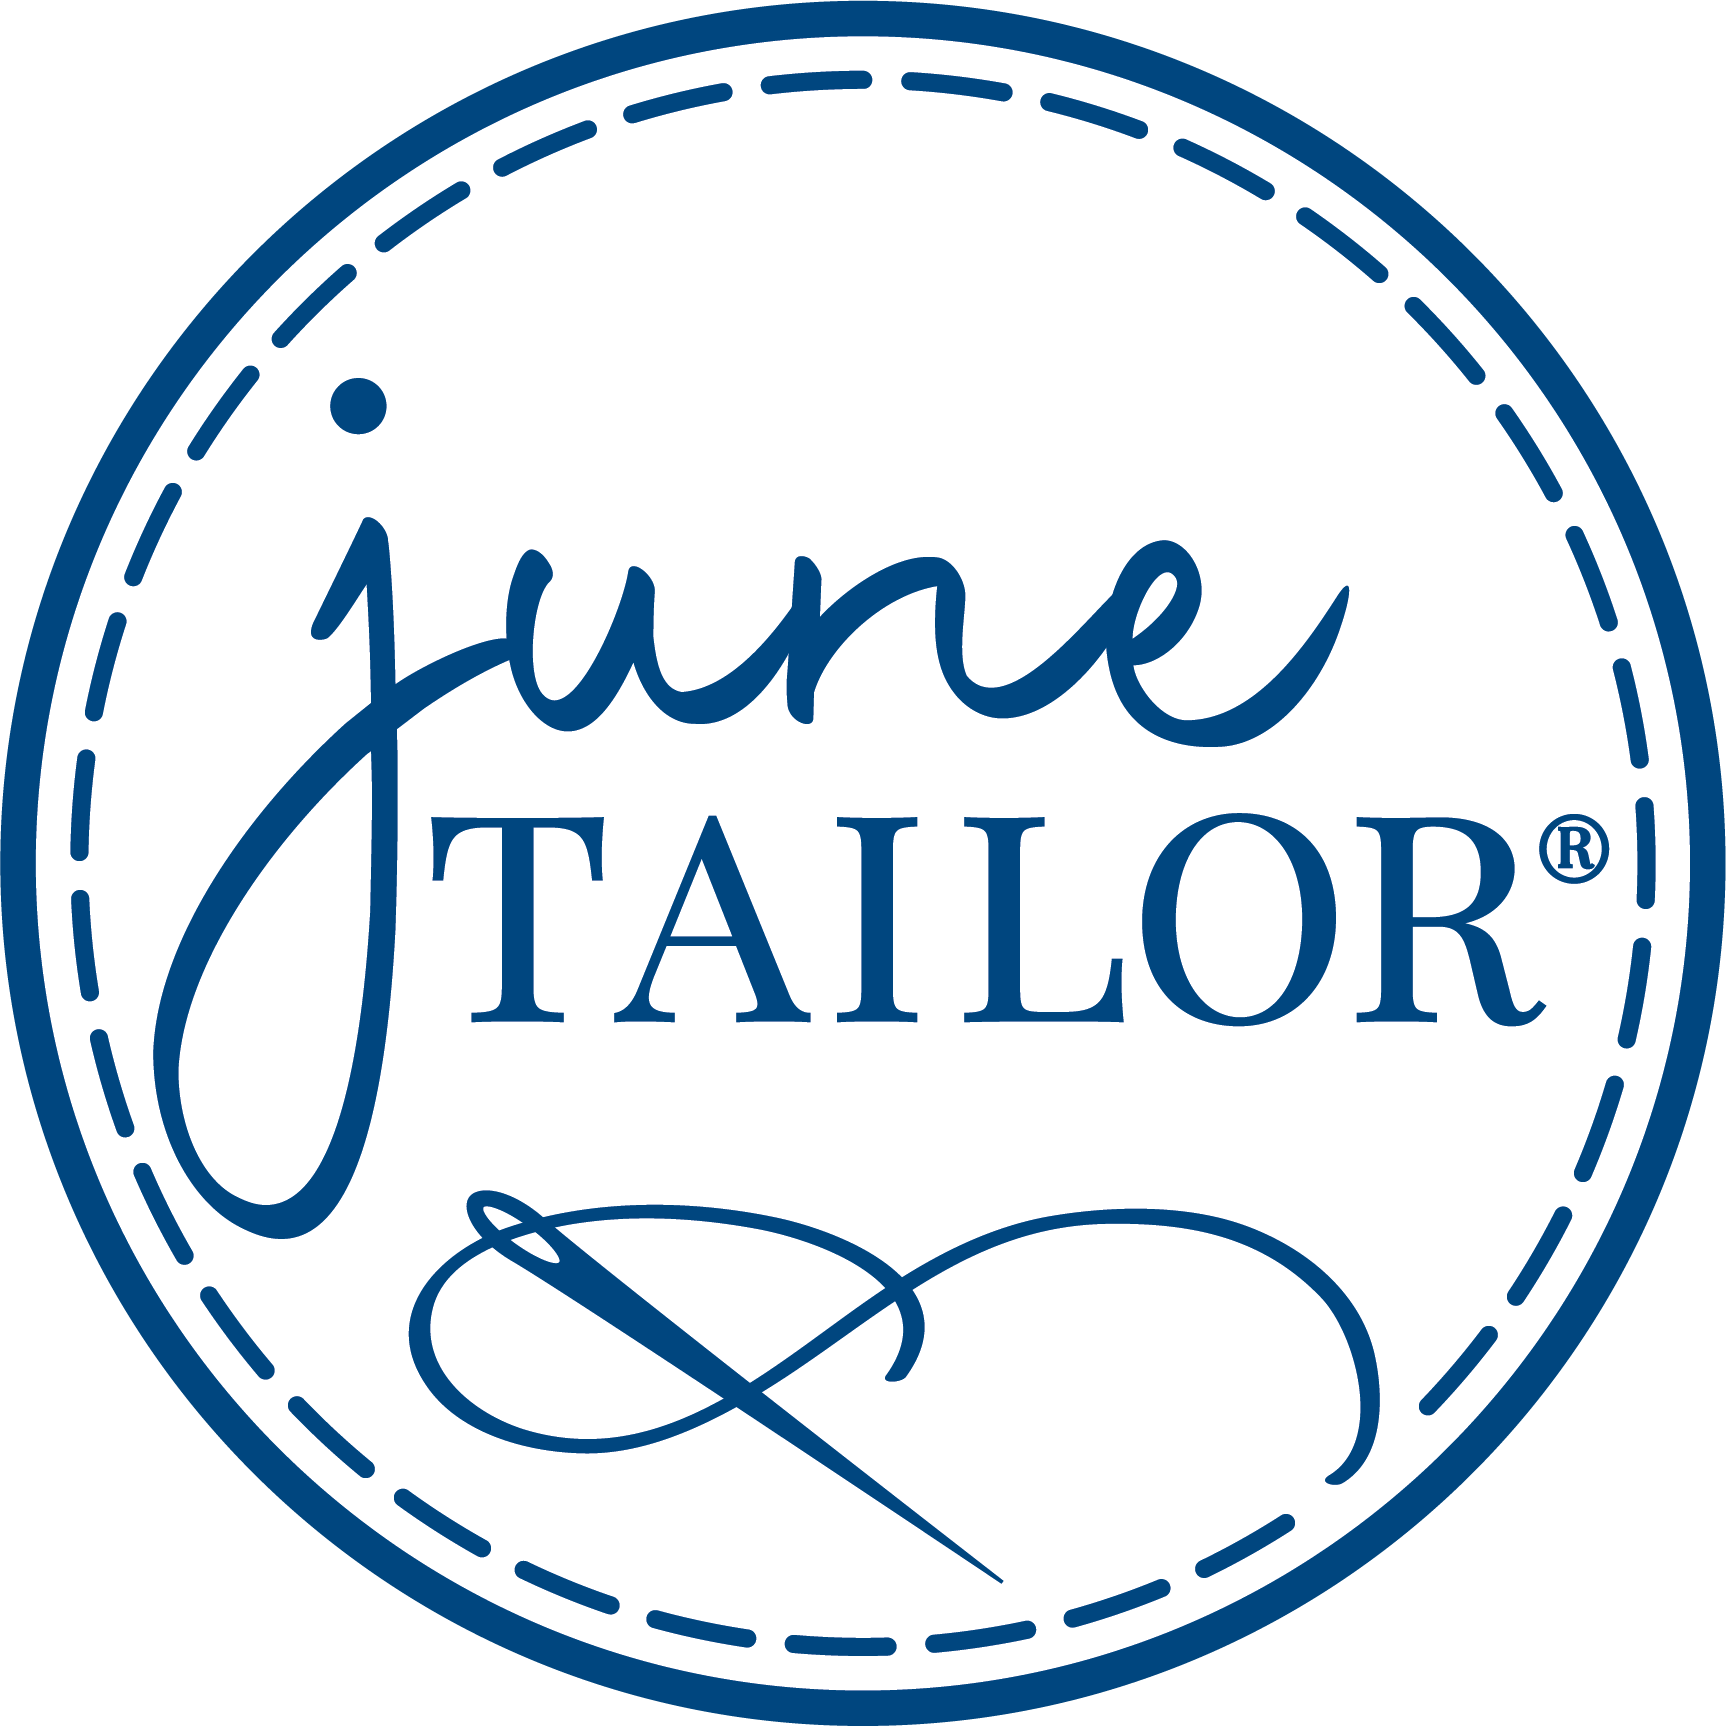 June Tailor